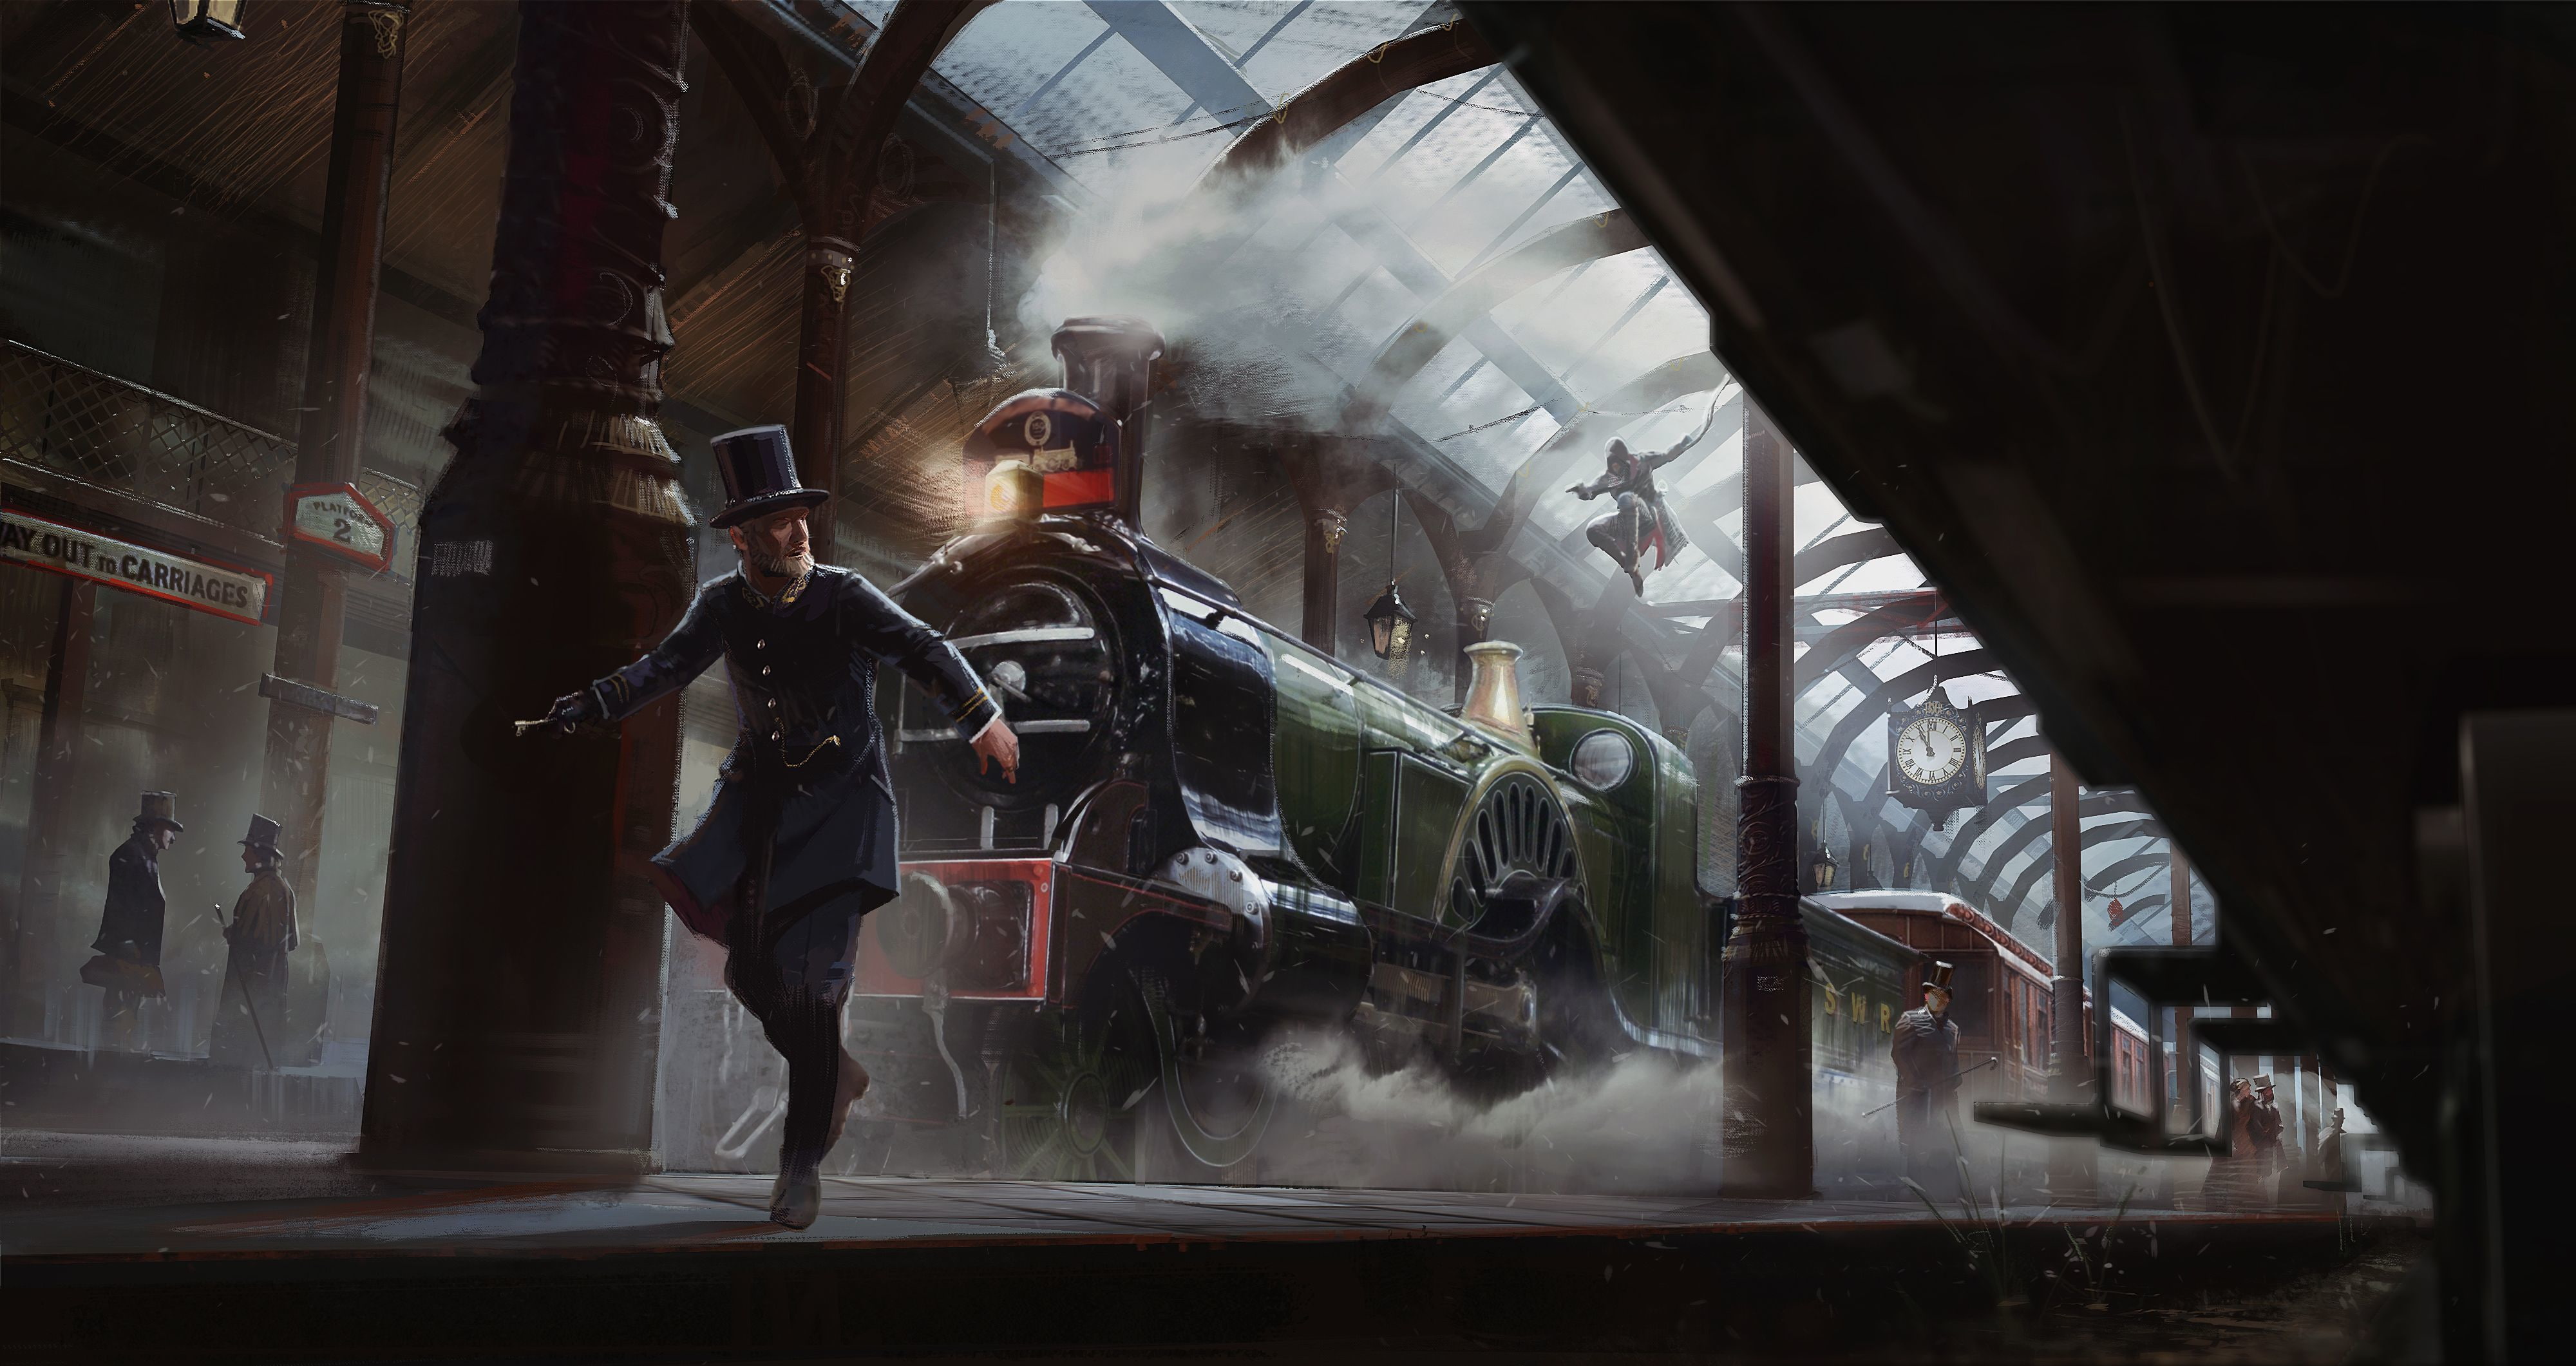 Hogwarts trains station digital wallpaper, Smoke, The engine